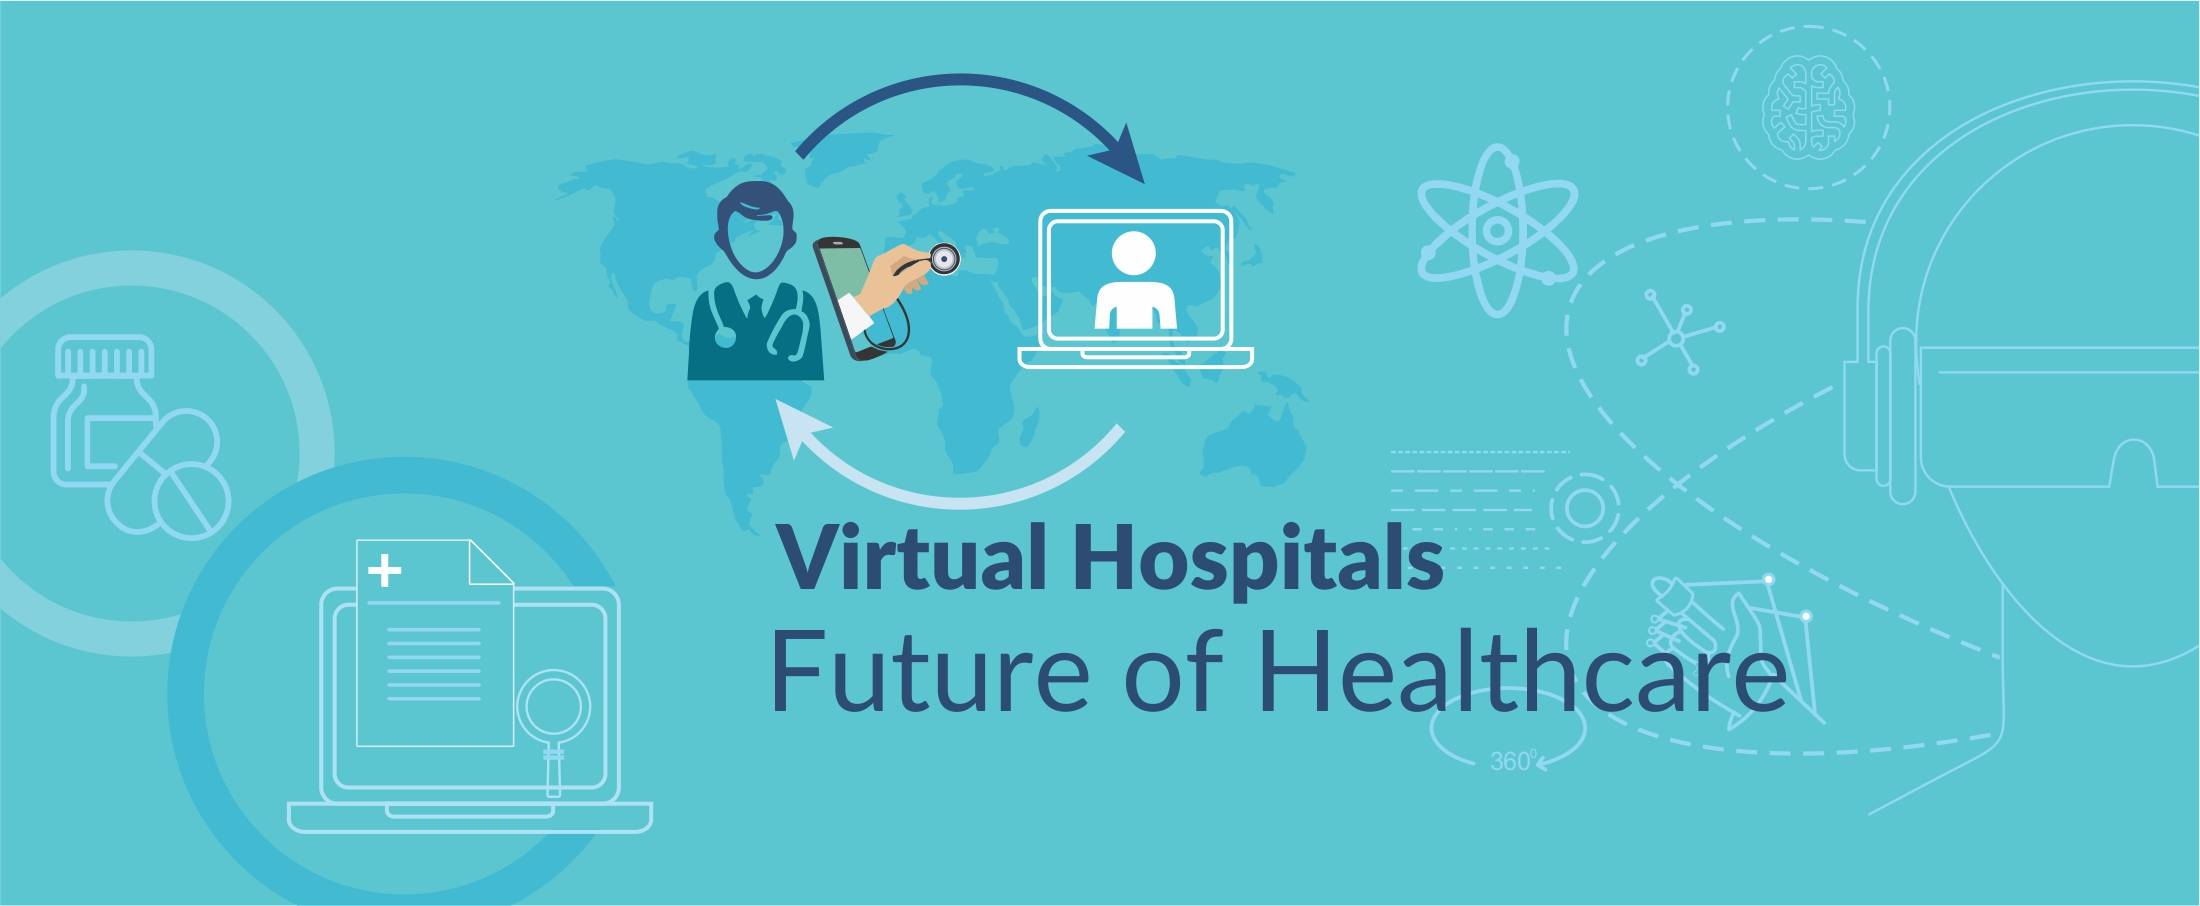 Virtual Hospitals: Future of Healthcare